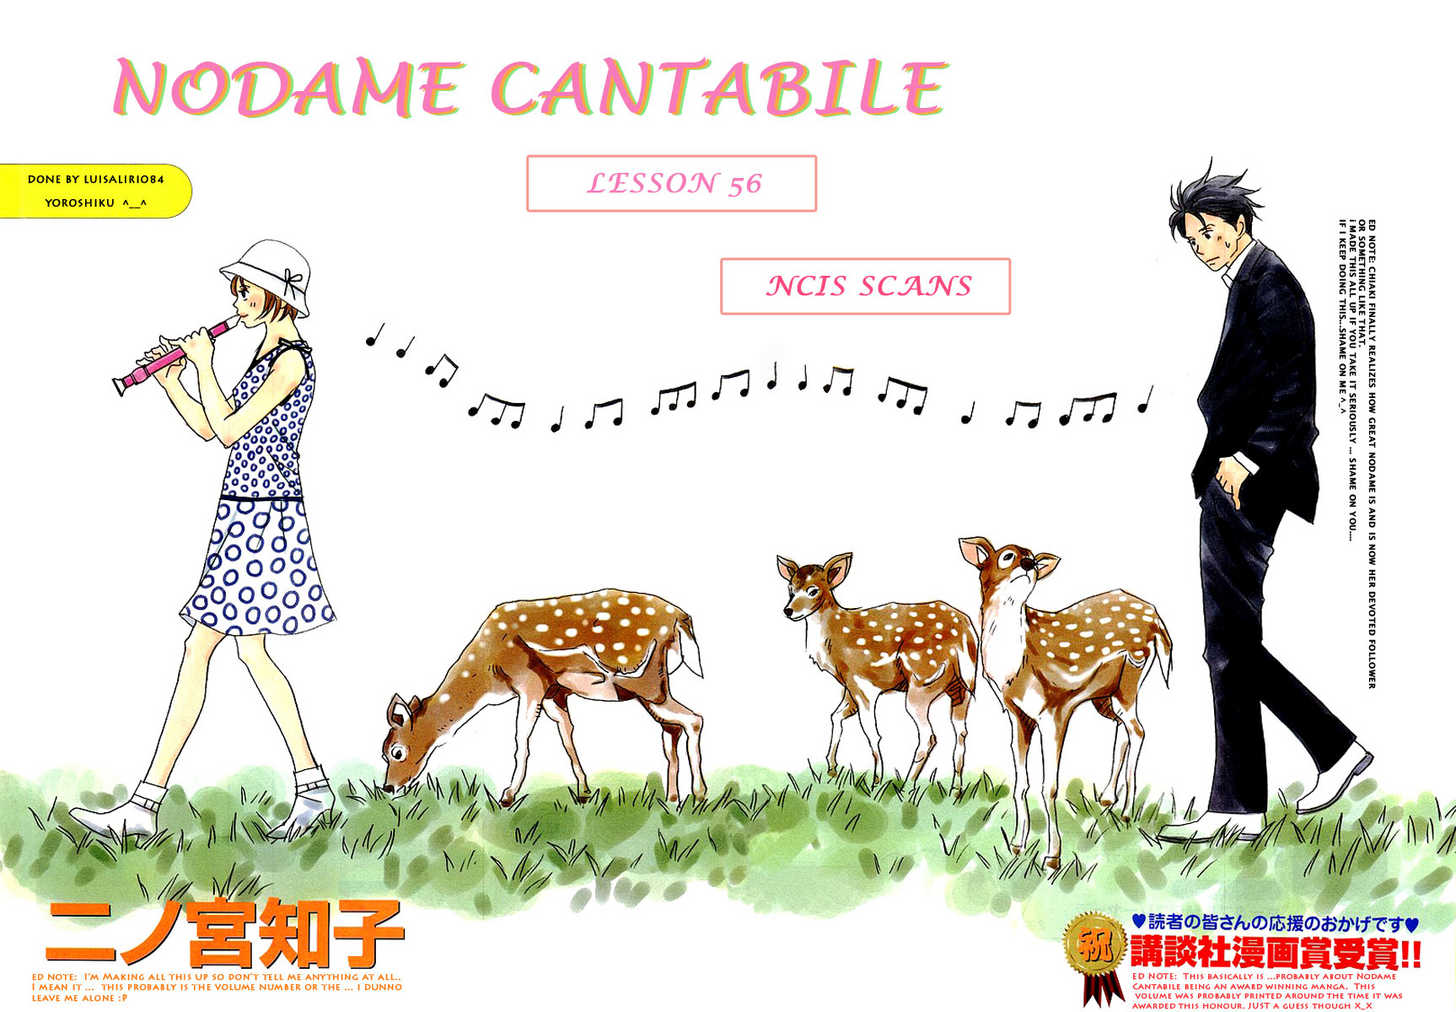 Nodame Cantabile 56